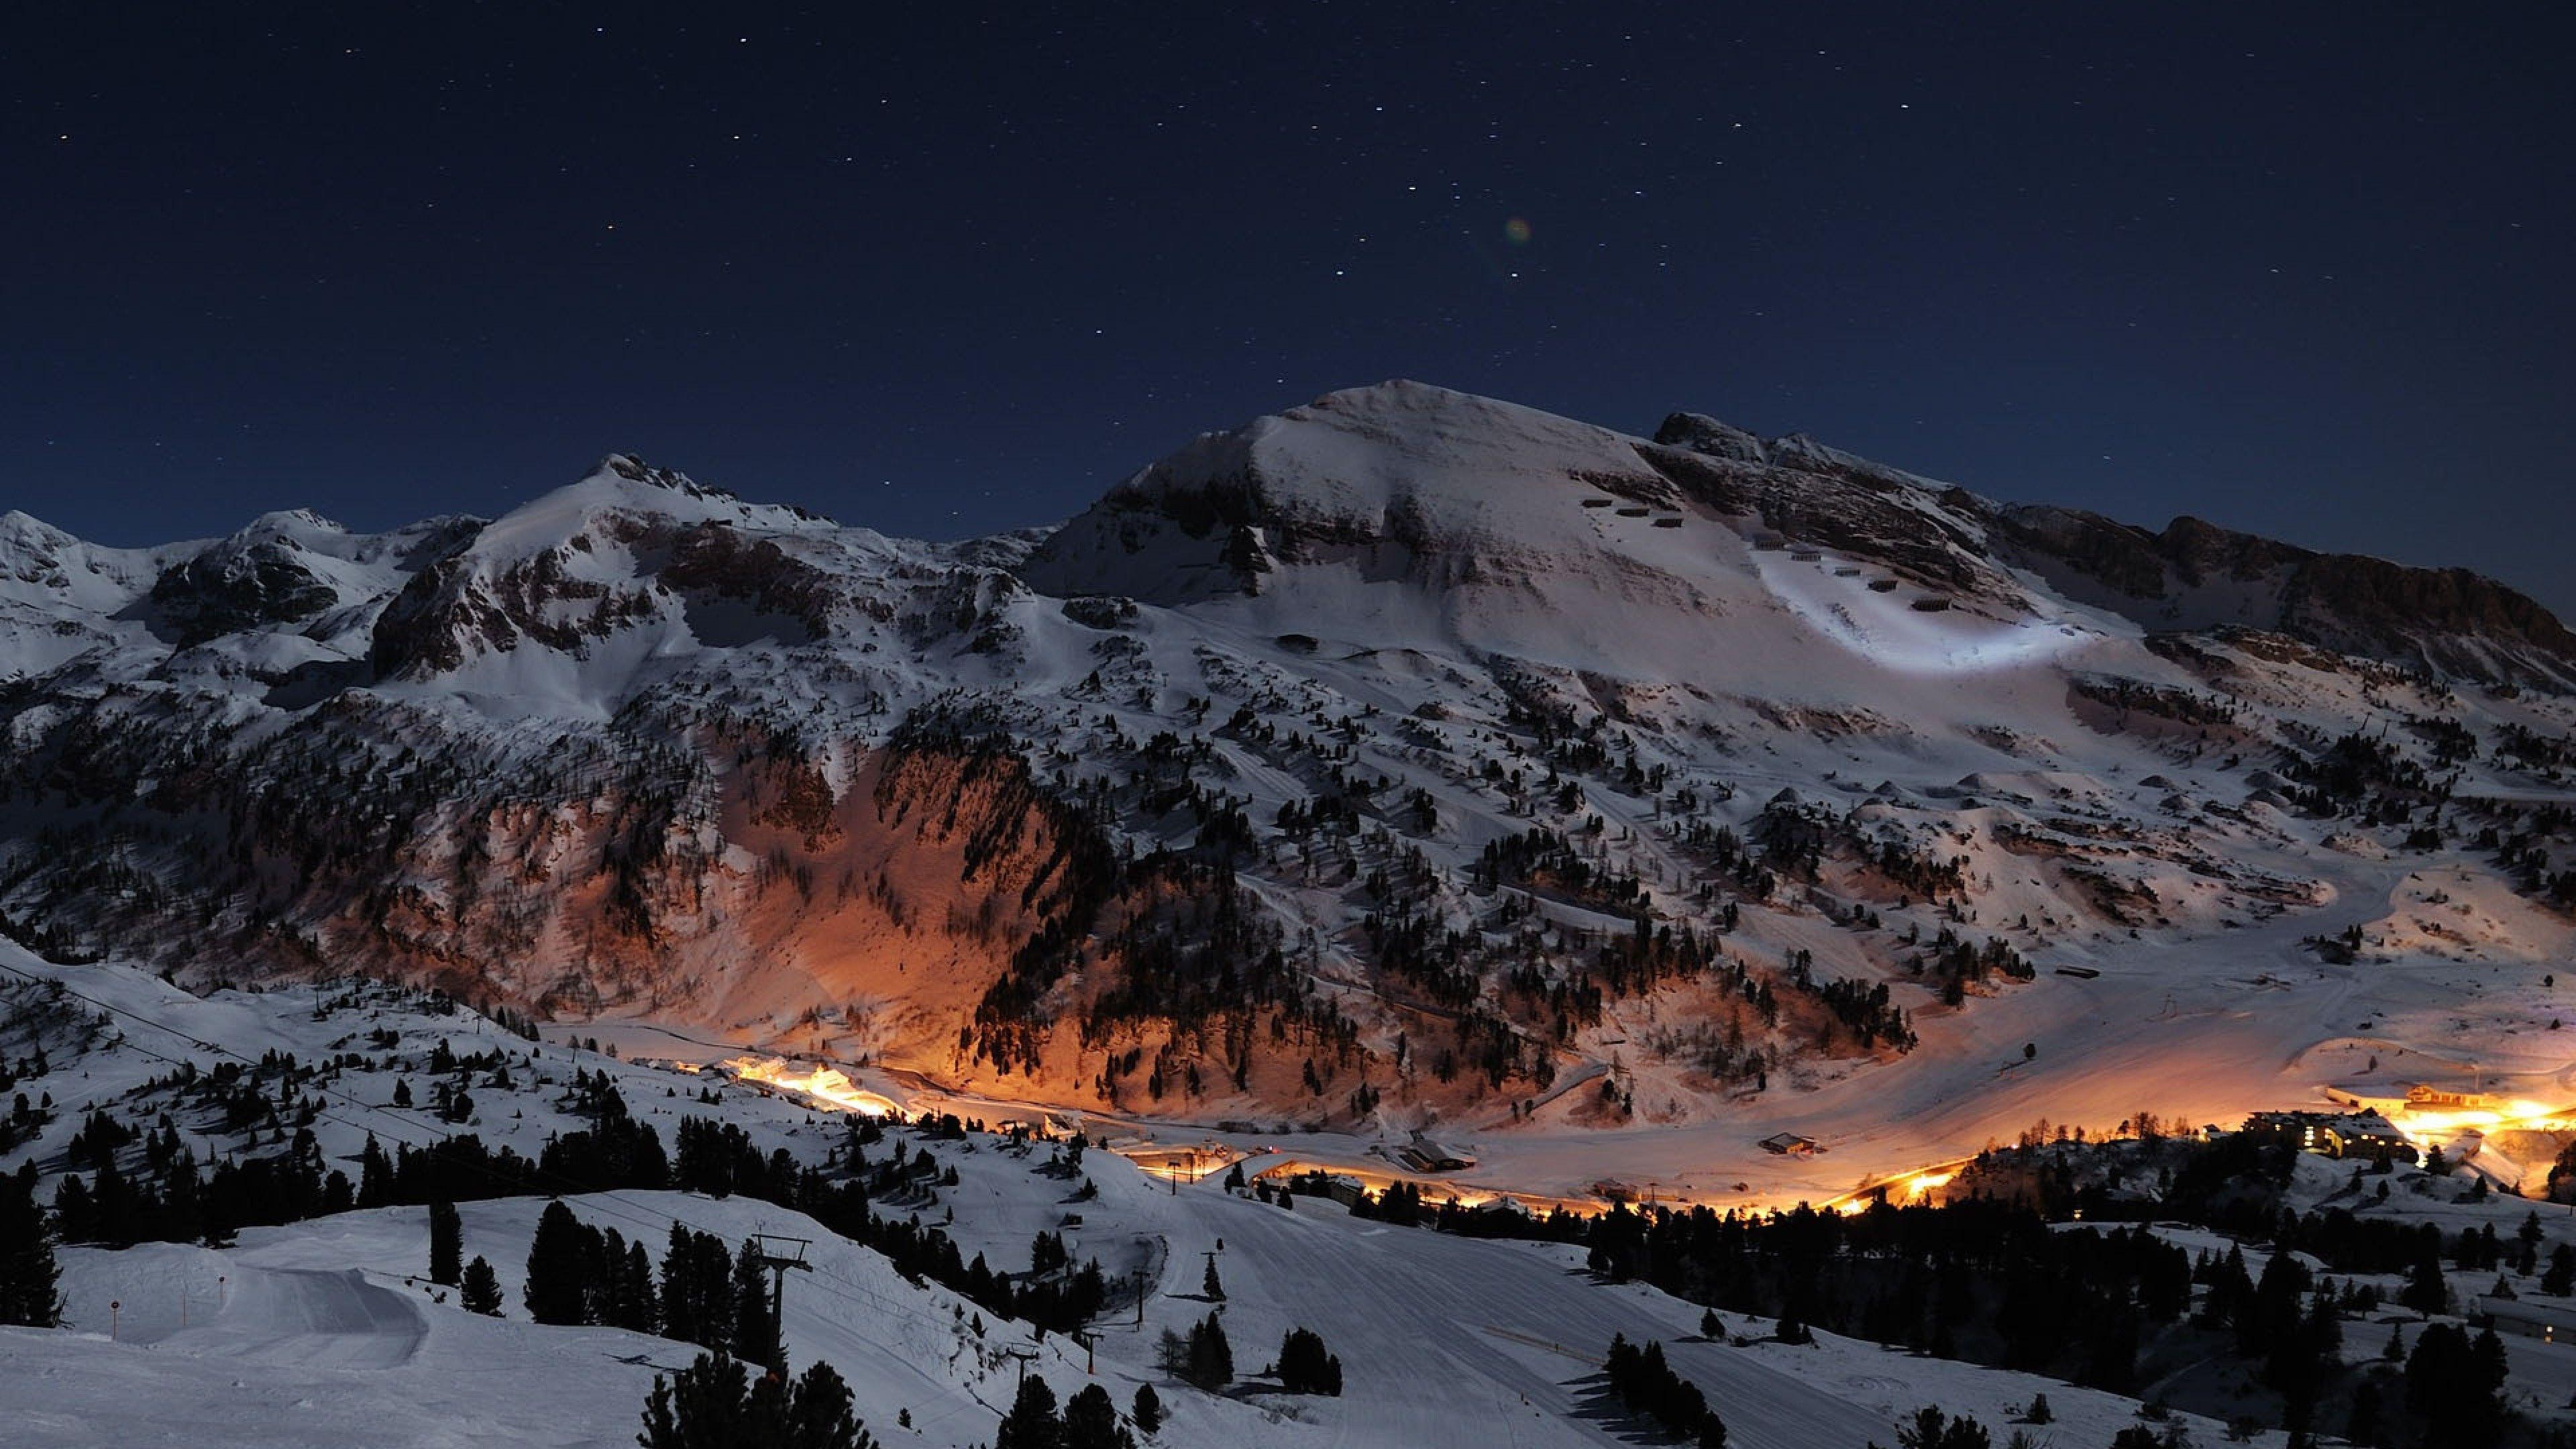 Night Star Alps. Mountain picture, Mountain wallpaper, Mountains